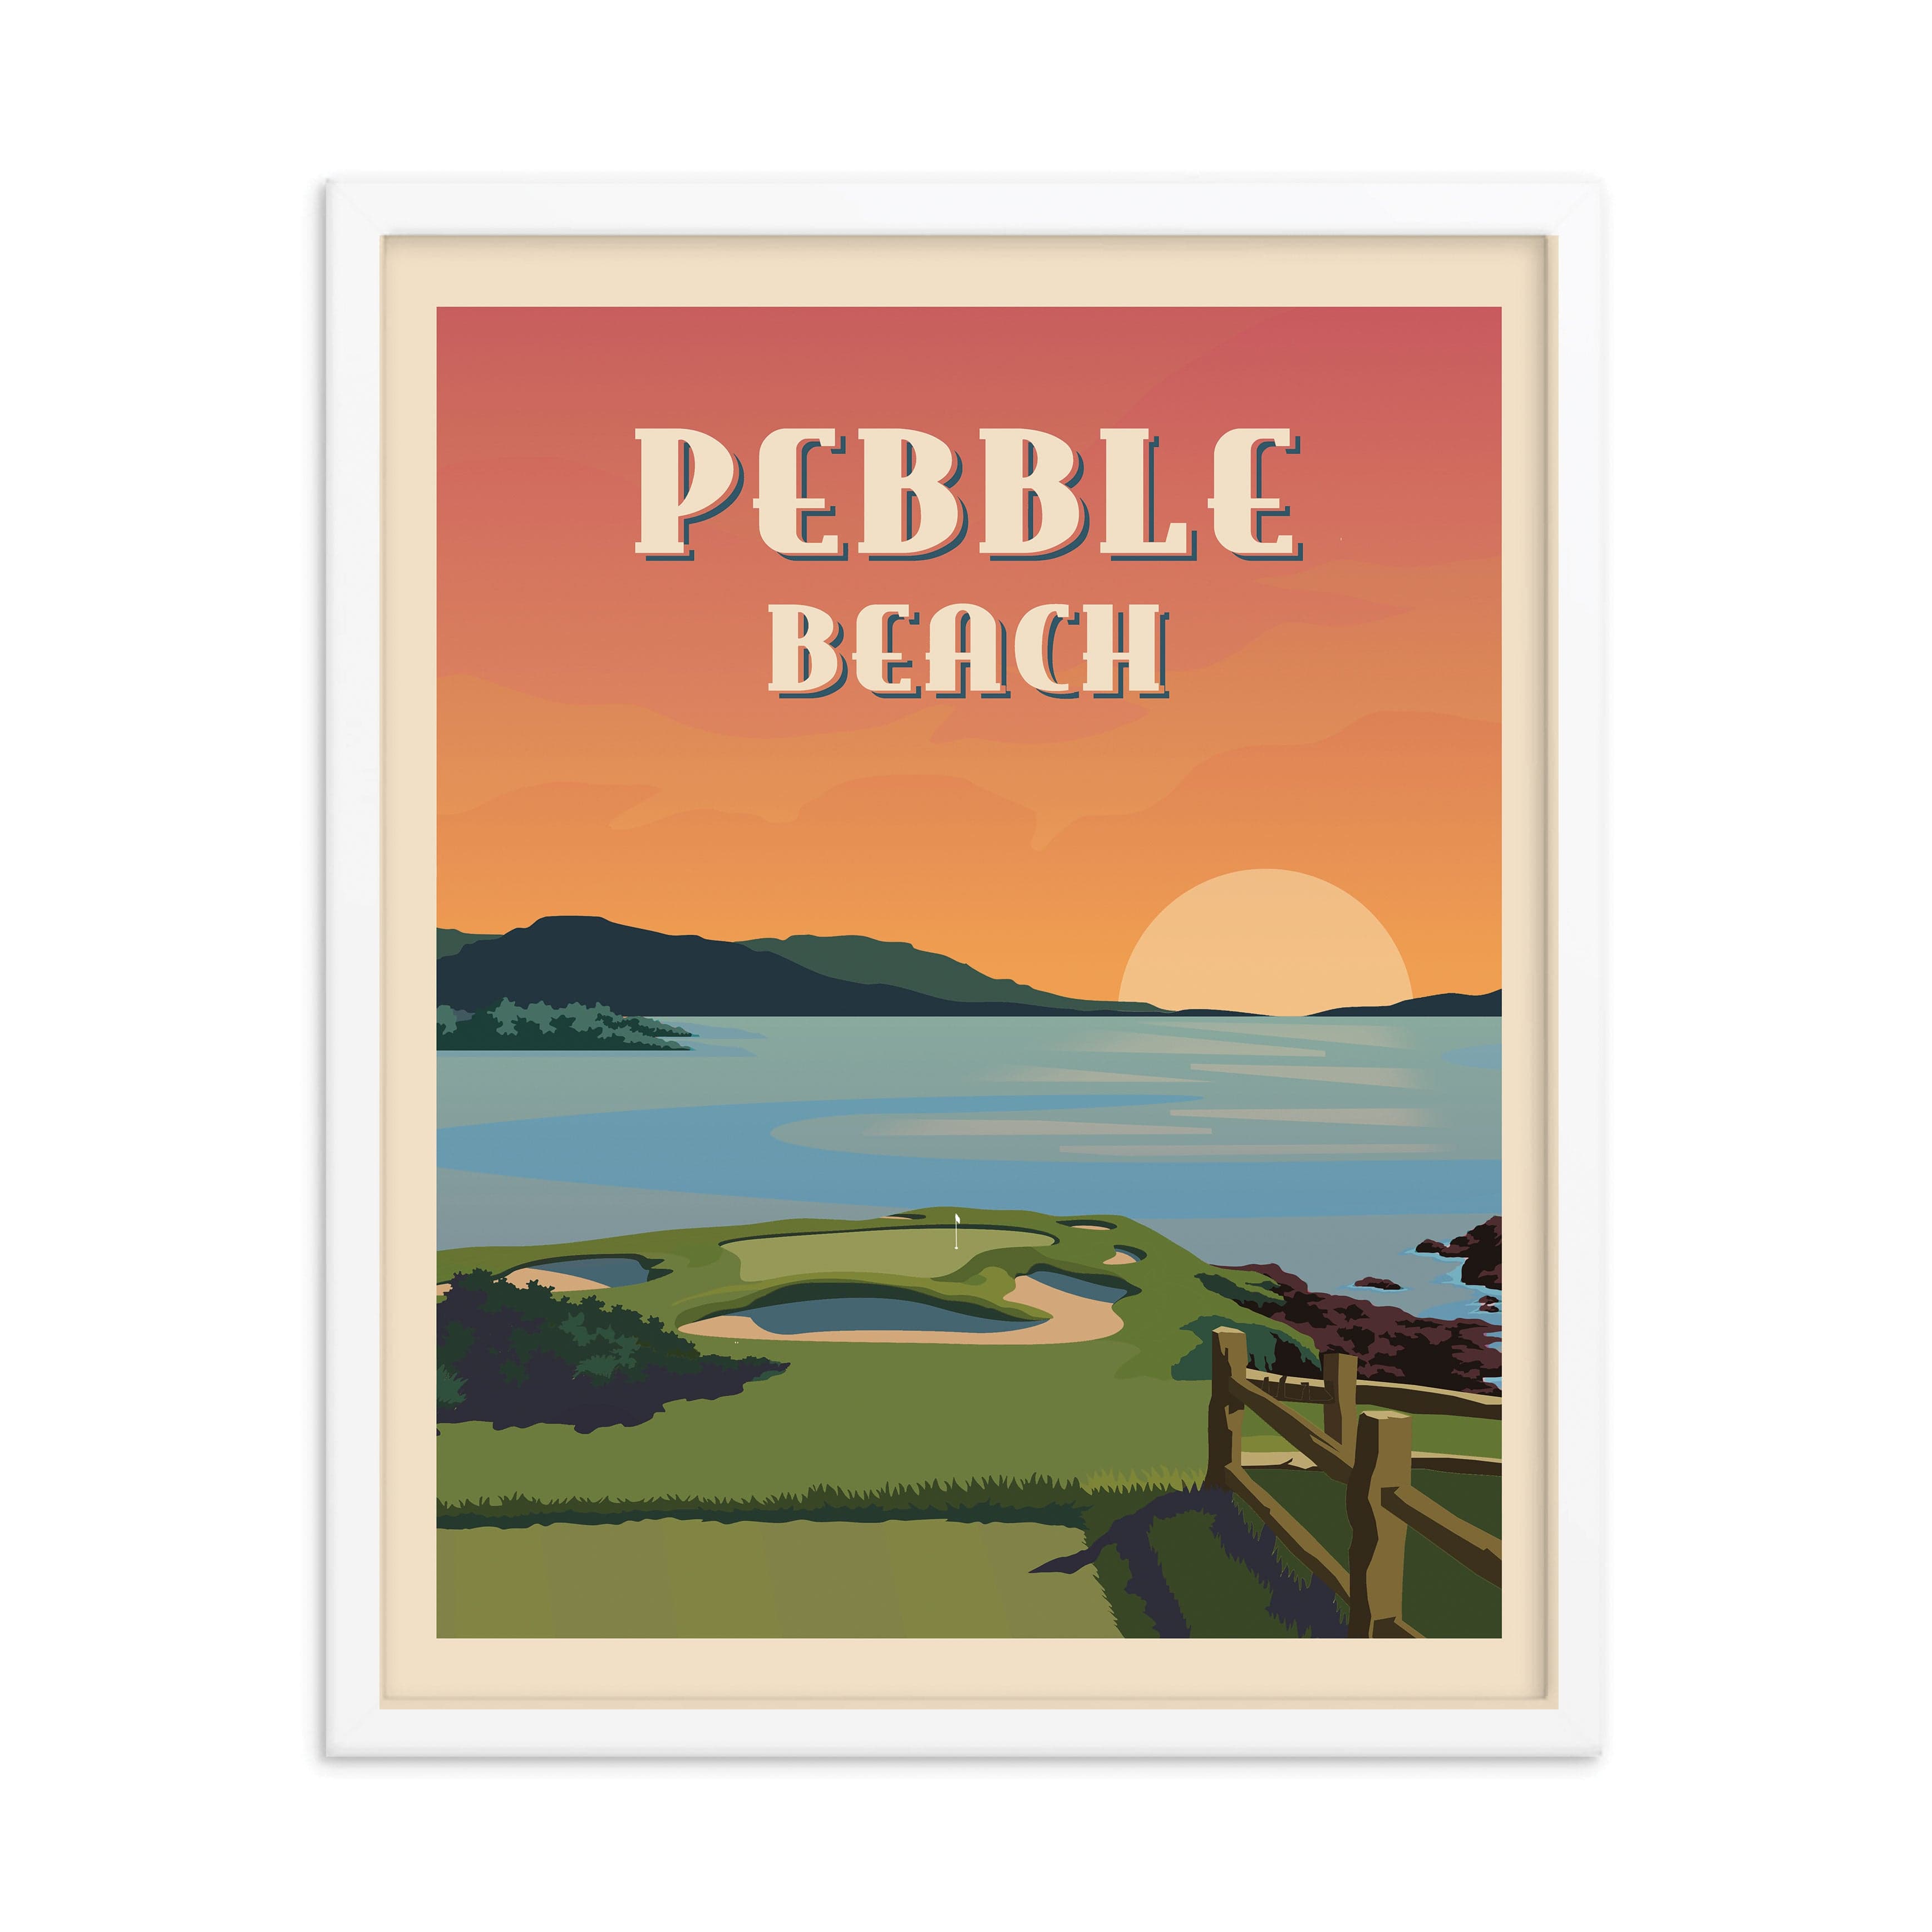 The 19th Hole Golf Shop - Golf Course Prints -  Pebble Beach - Seven Golf Course Map